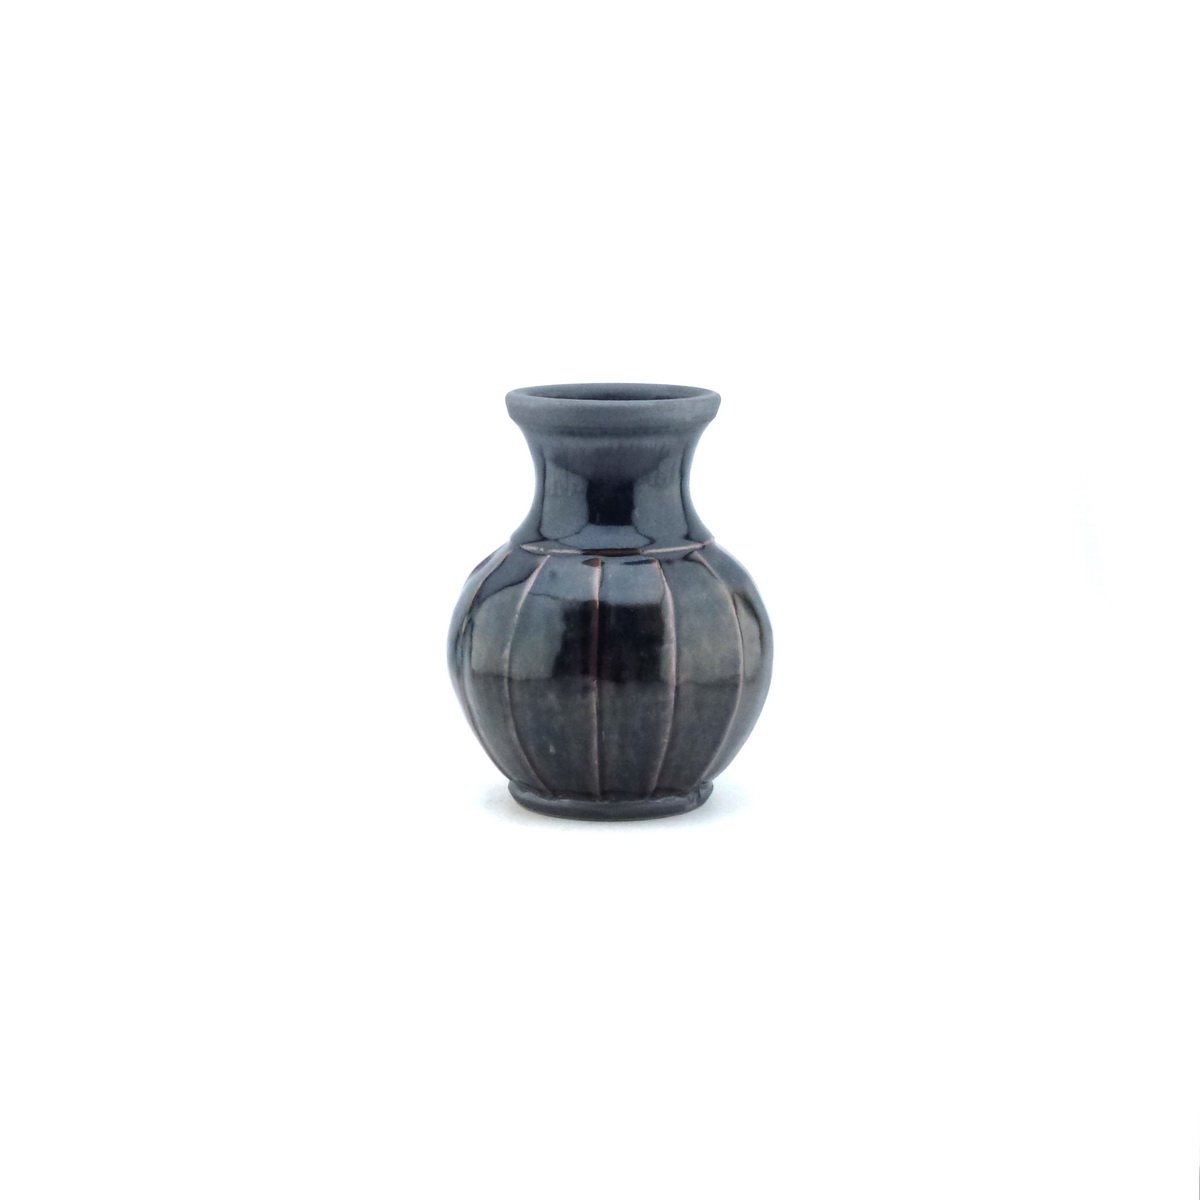 Faceted stoneware bottle vase